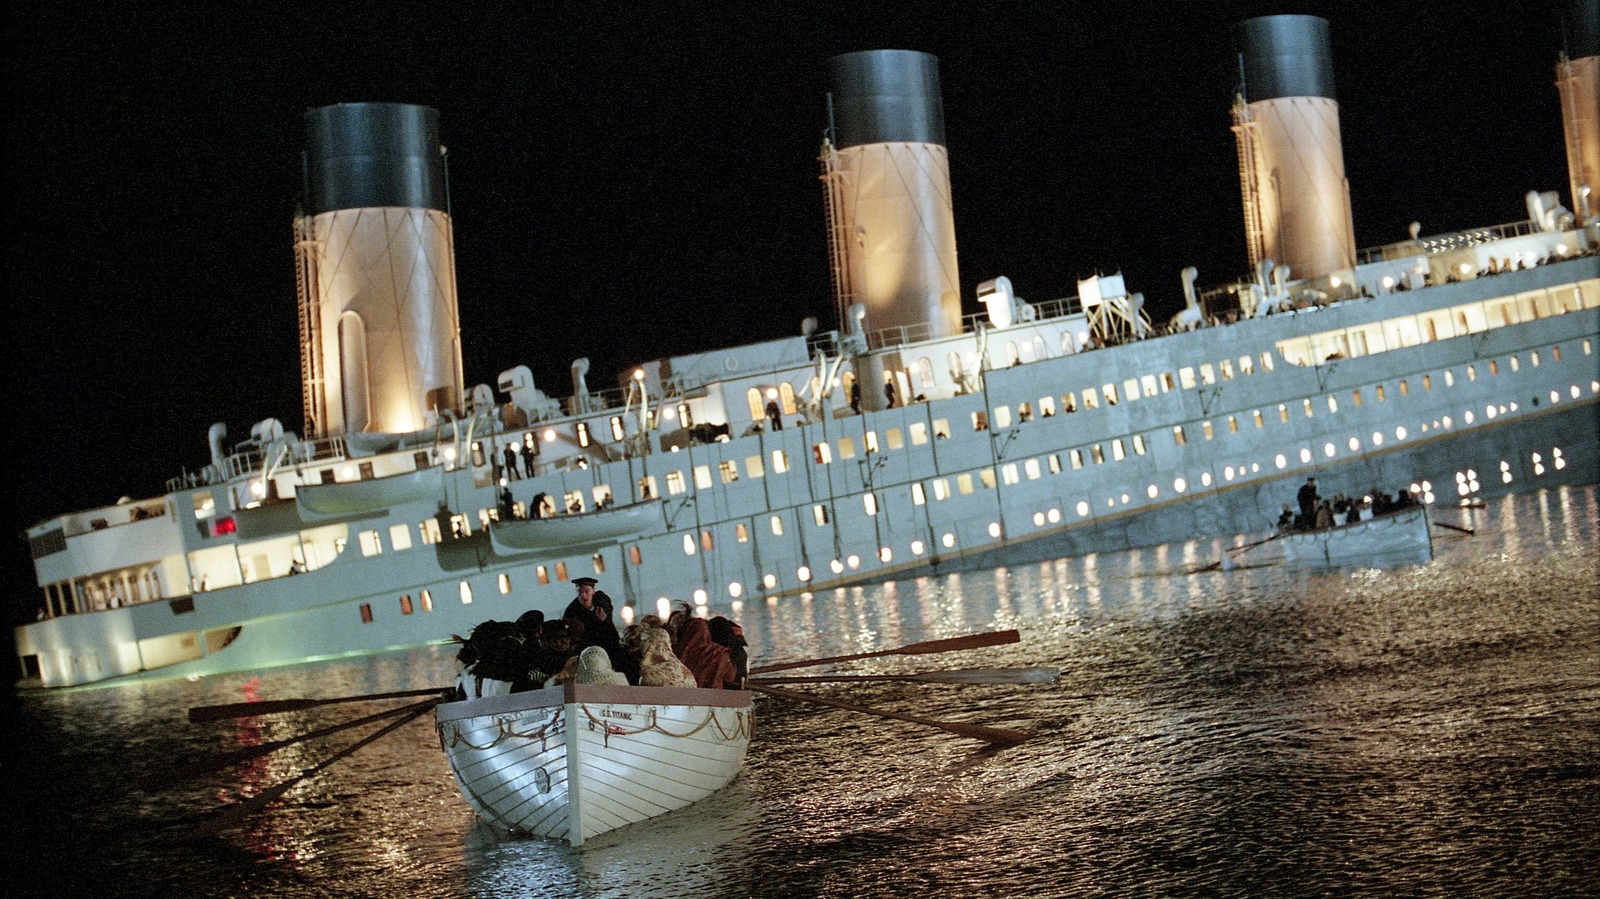 The scene of the Titanic sinking